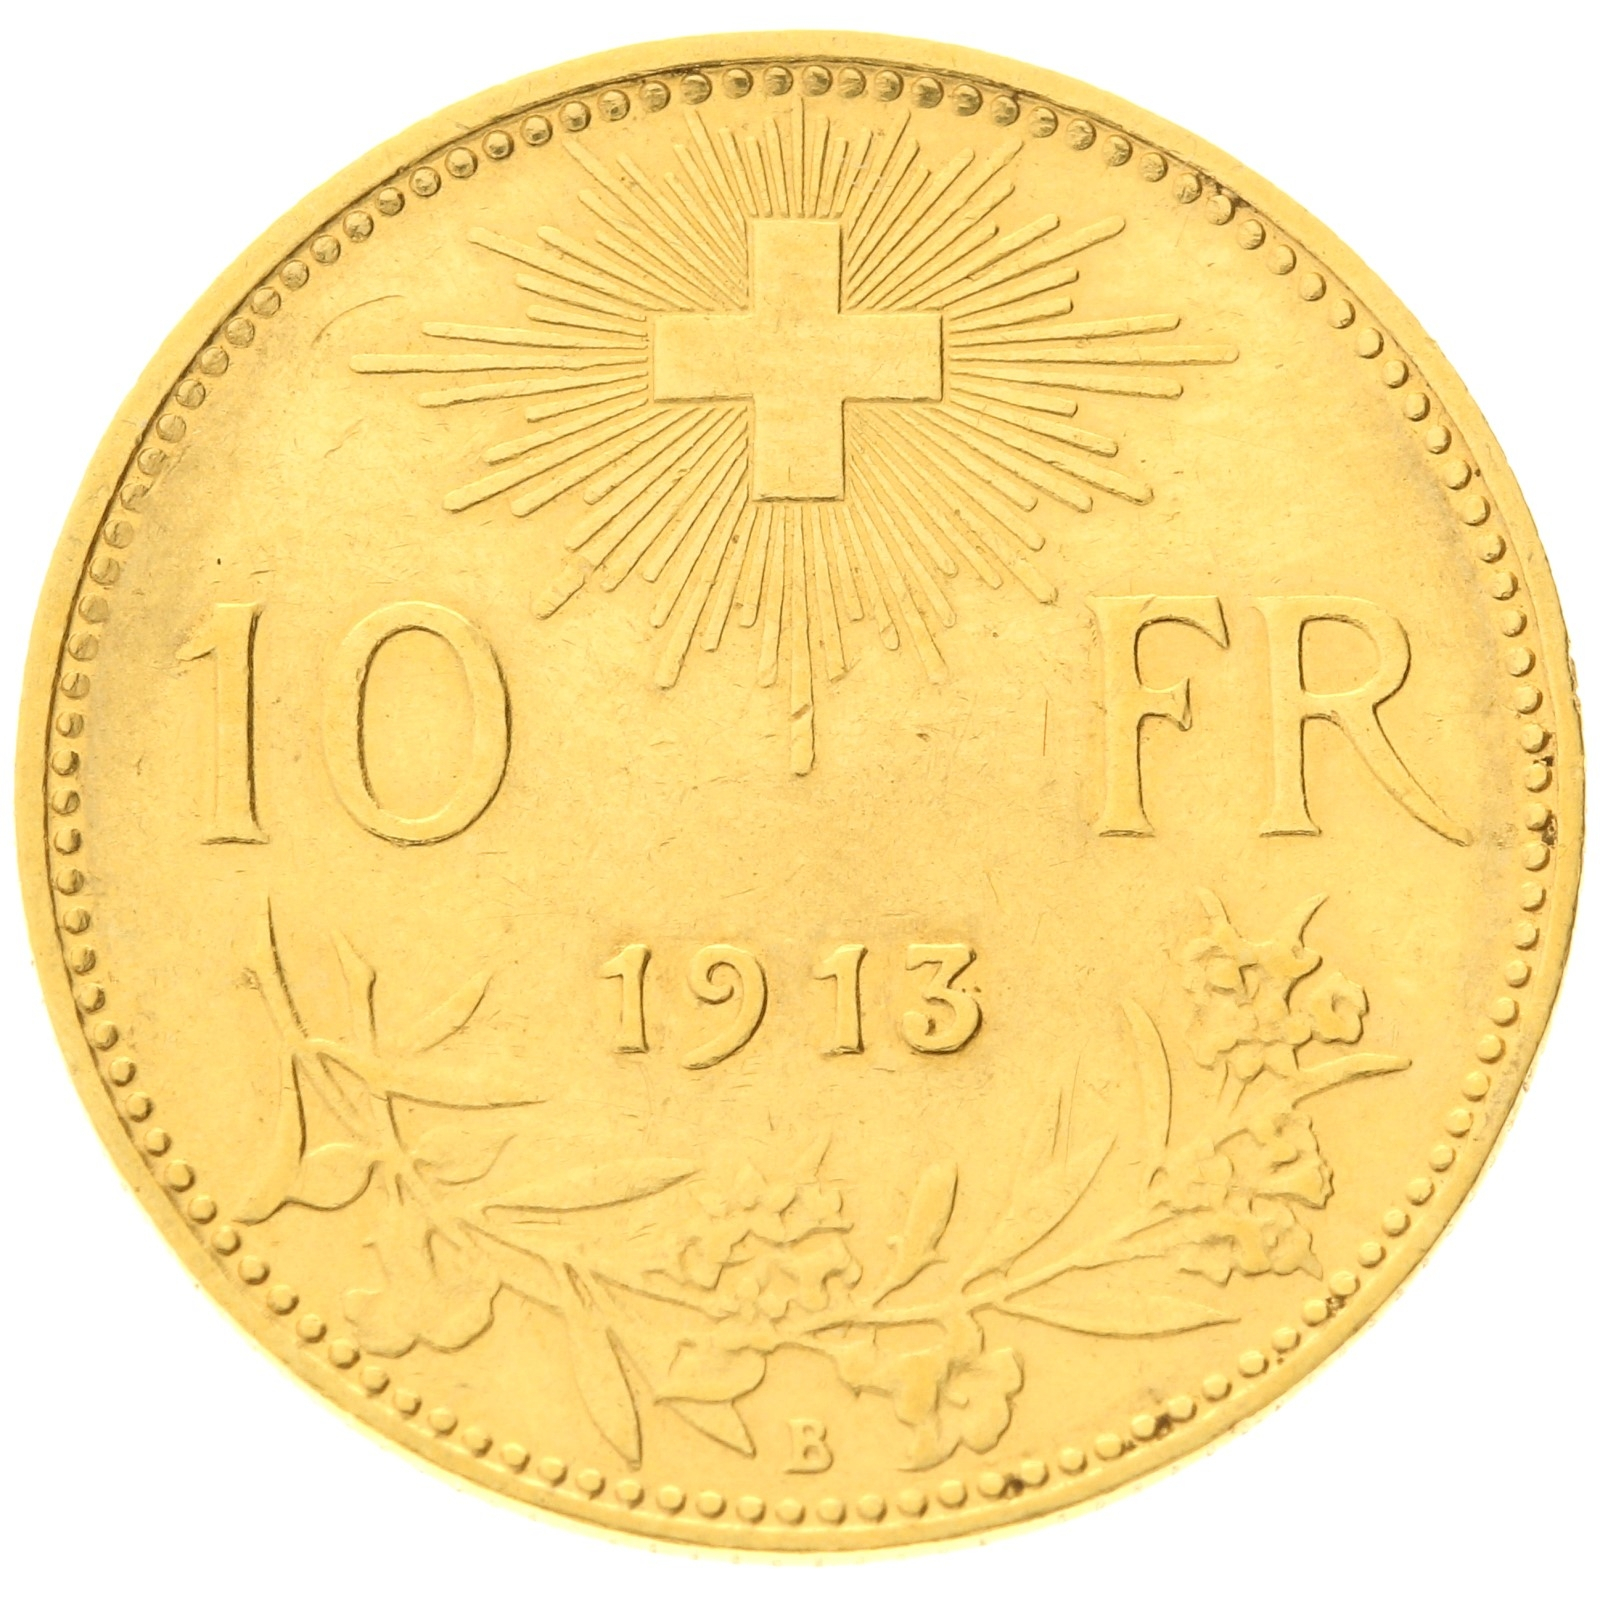 Switzerland - 10 francs - 1913